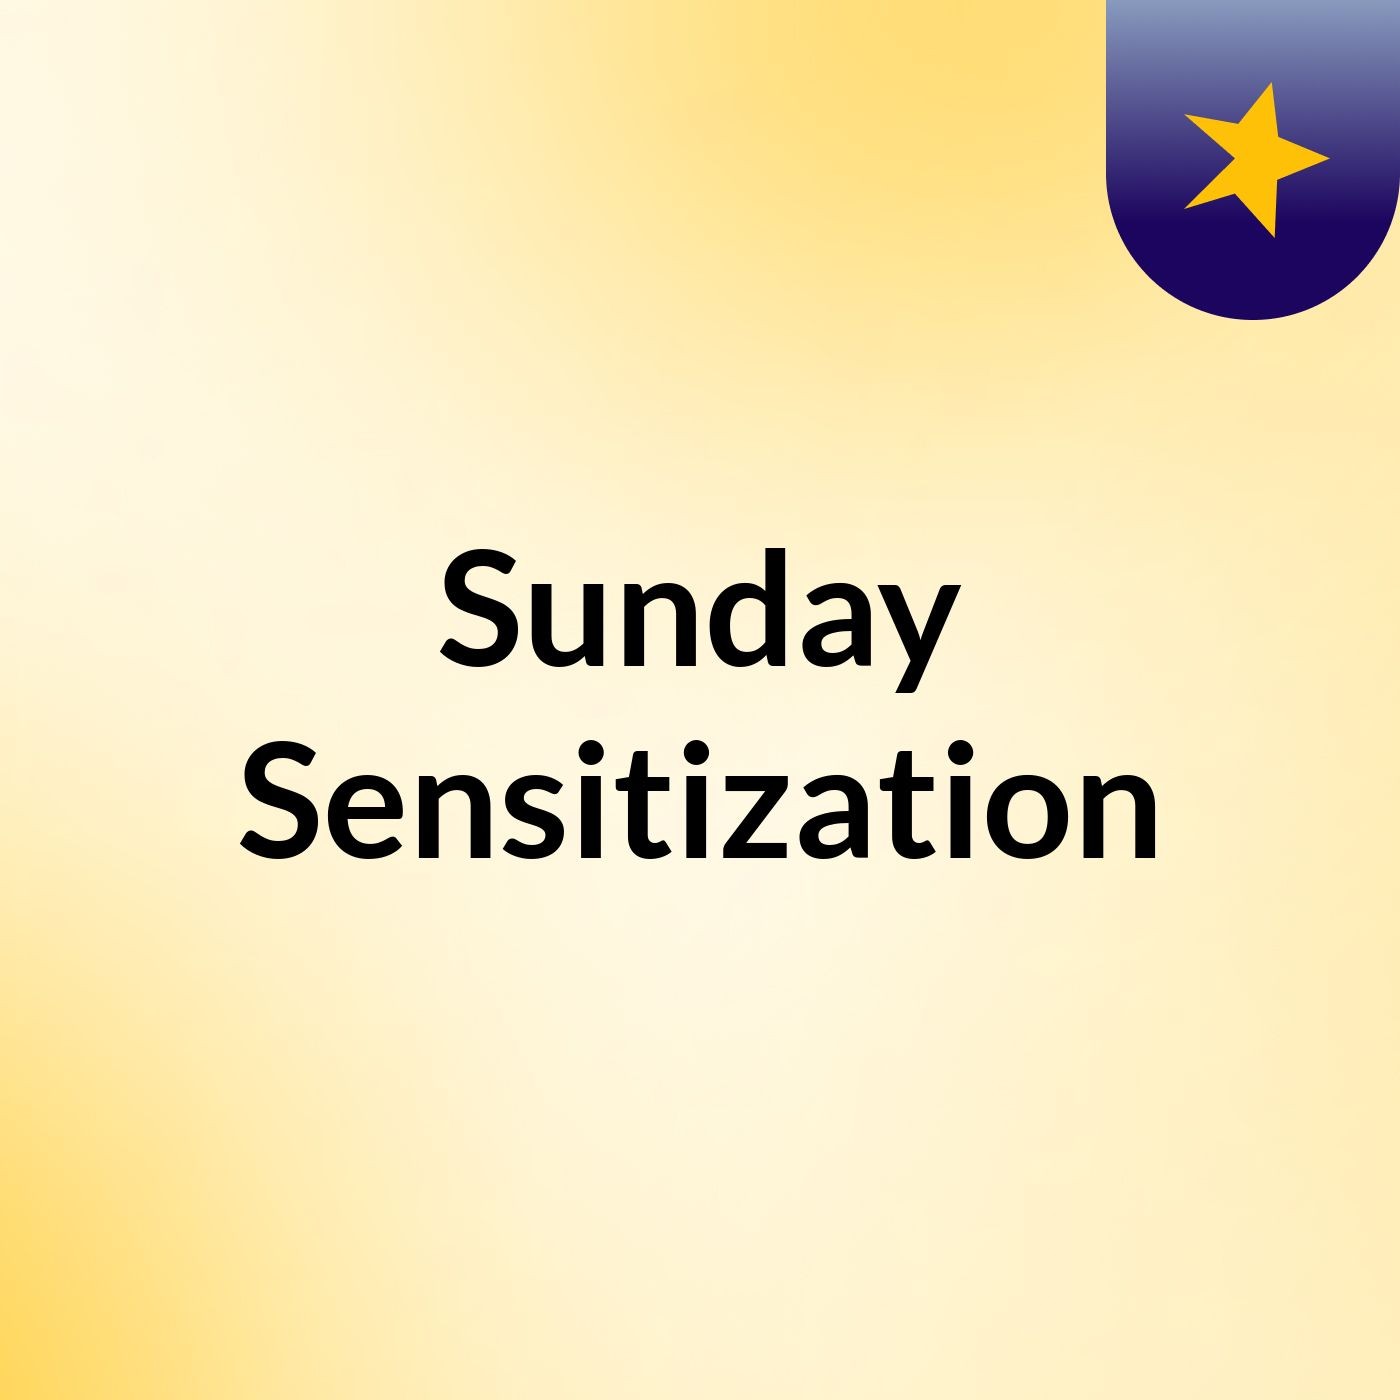 Sunday Sensitization